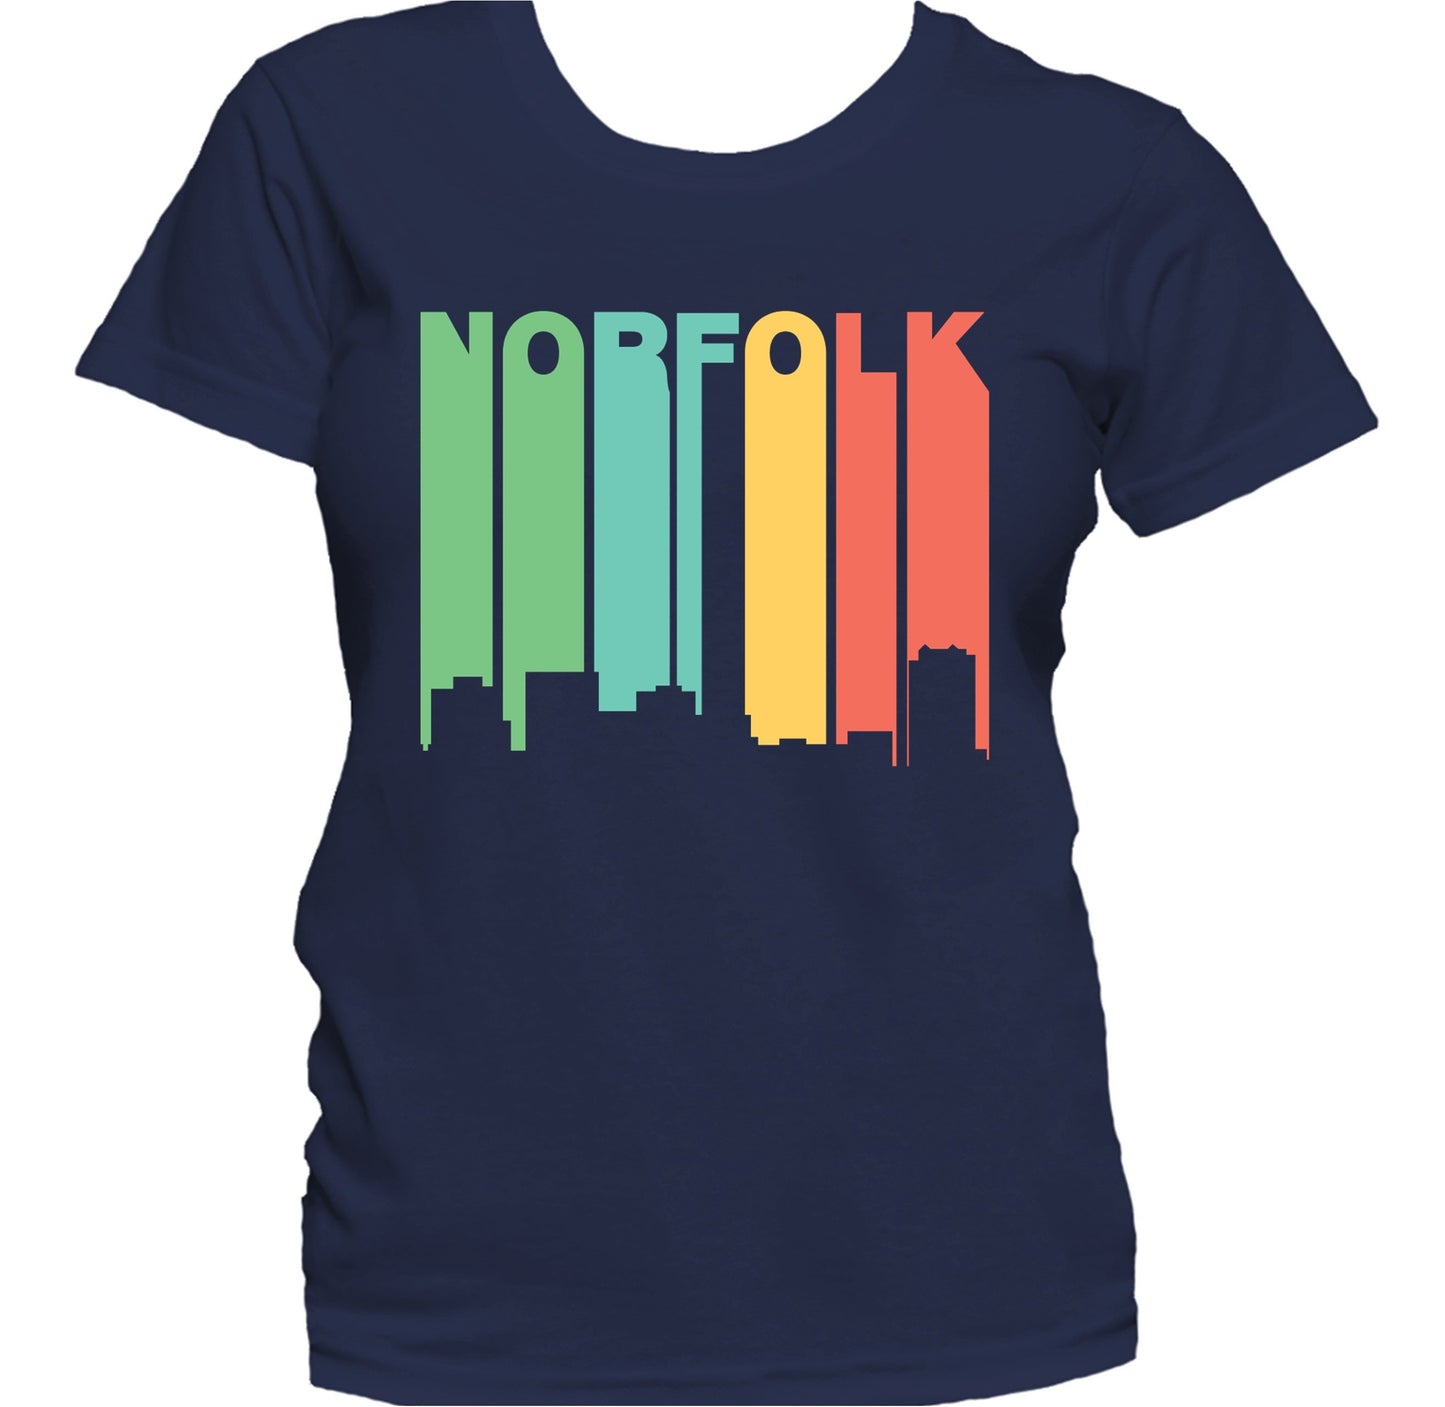 Retro 1970's Style Norfolk Virginia Skyline Women's T-Shirt